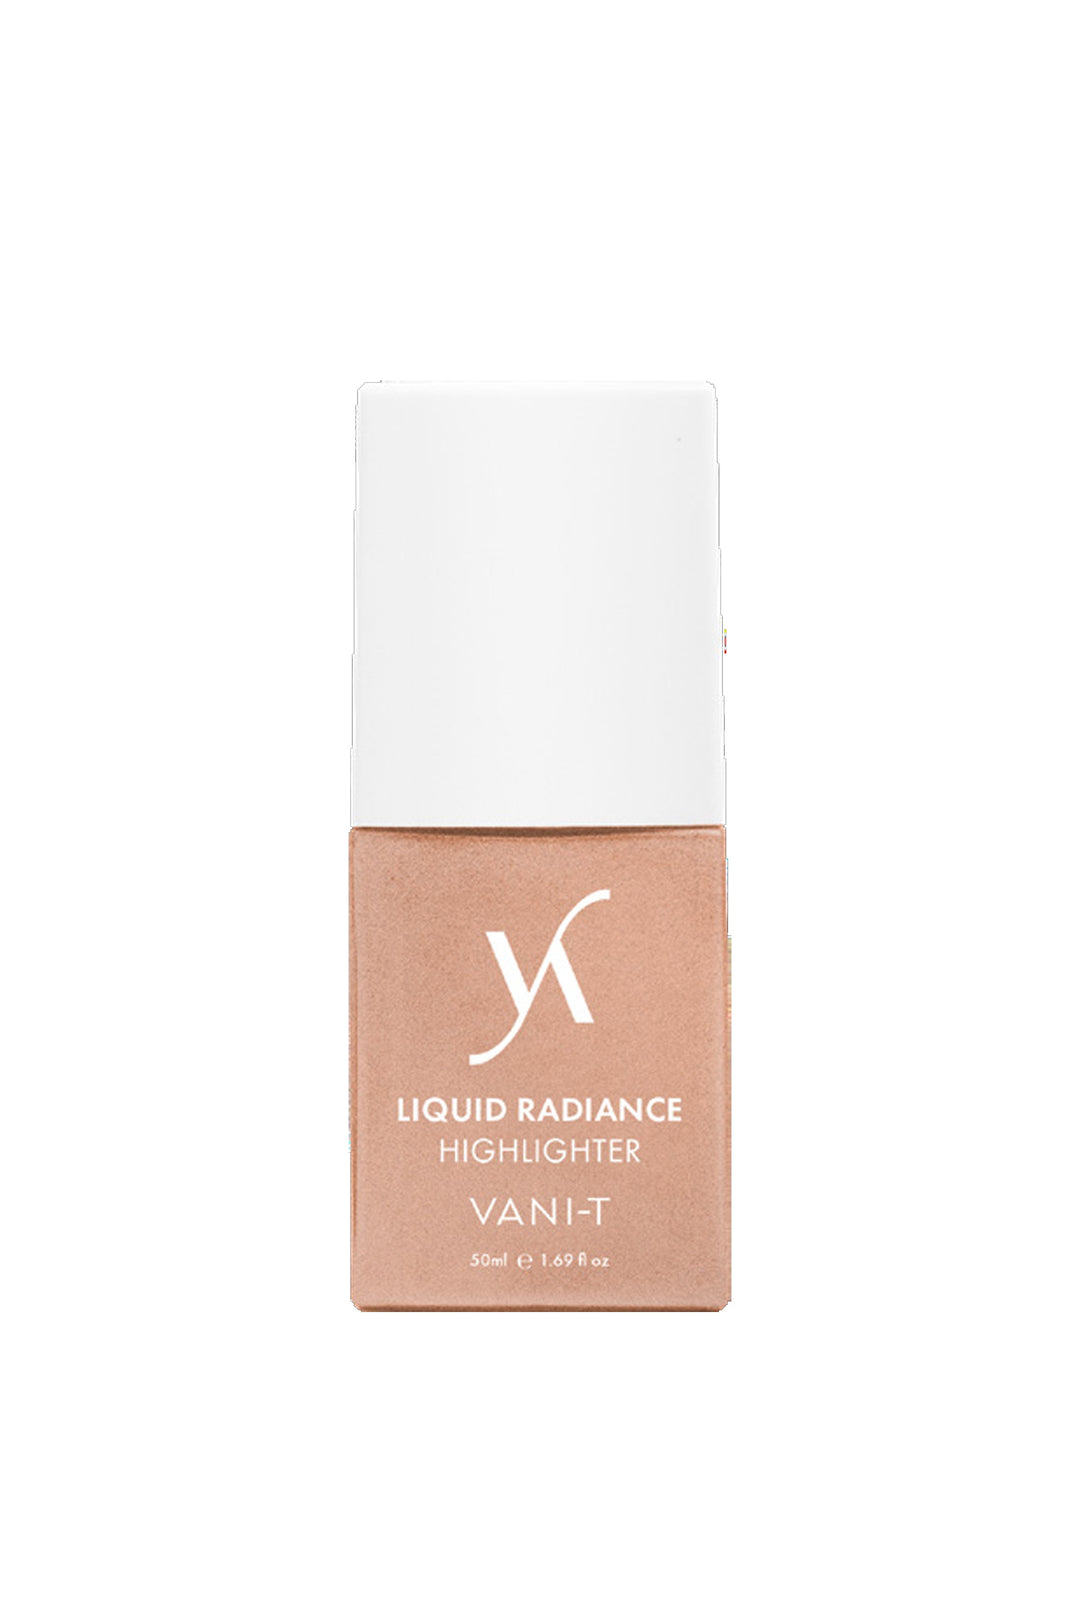 VANI-T Liquid Radiance Highlighter